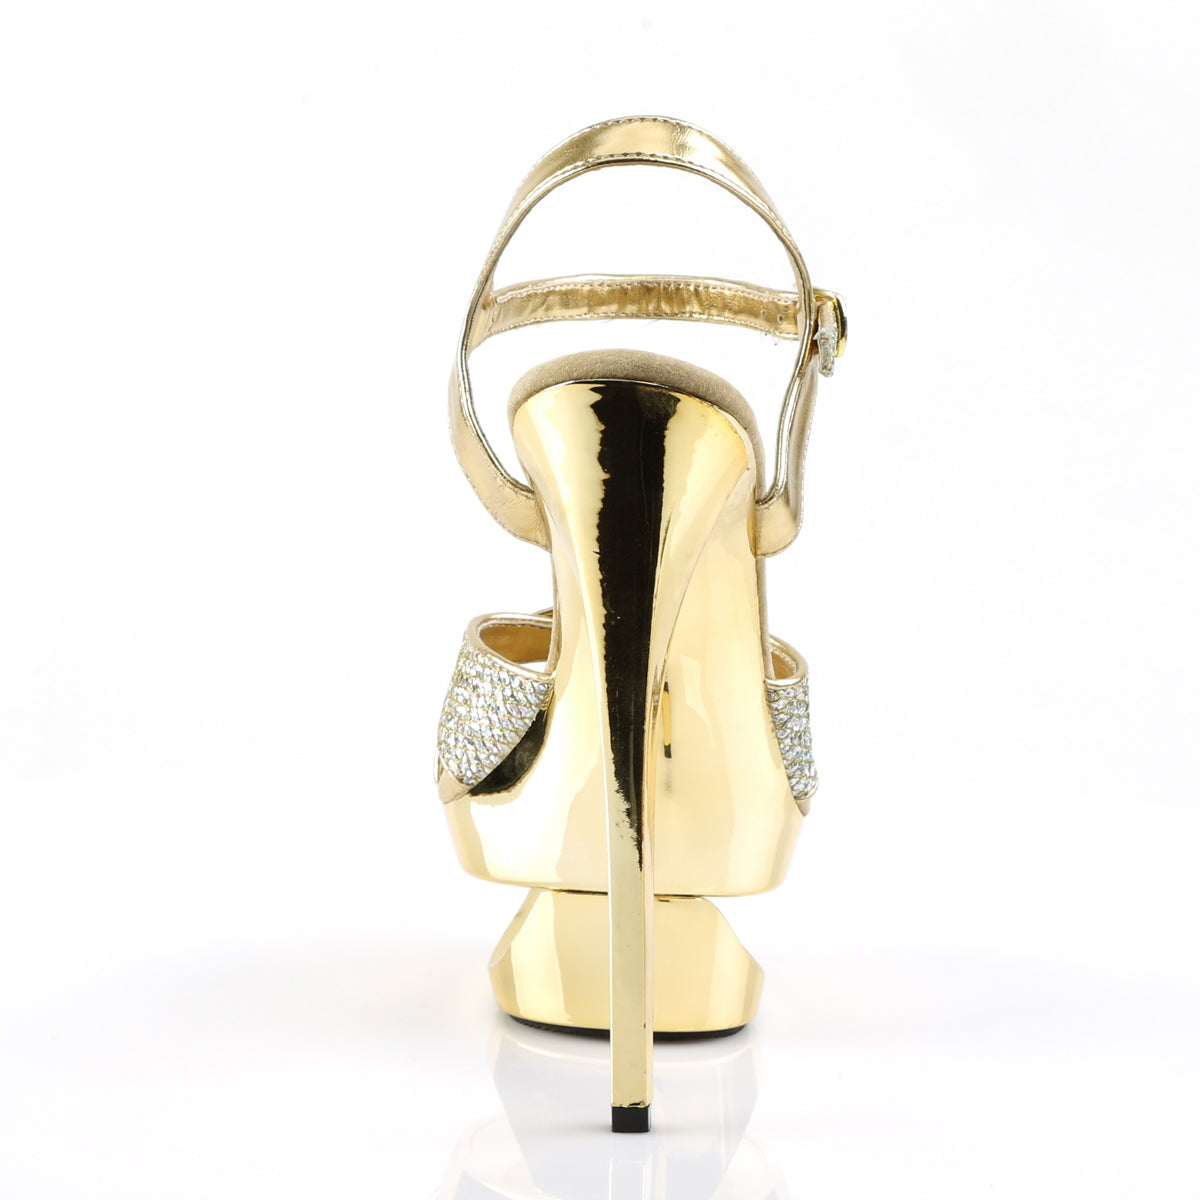 Pleaser Womens Sandals ECLIPSE-619G Gold Multi Gltr/Gold Chrome